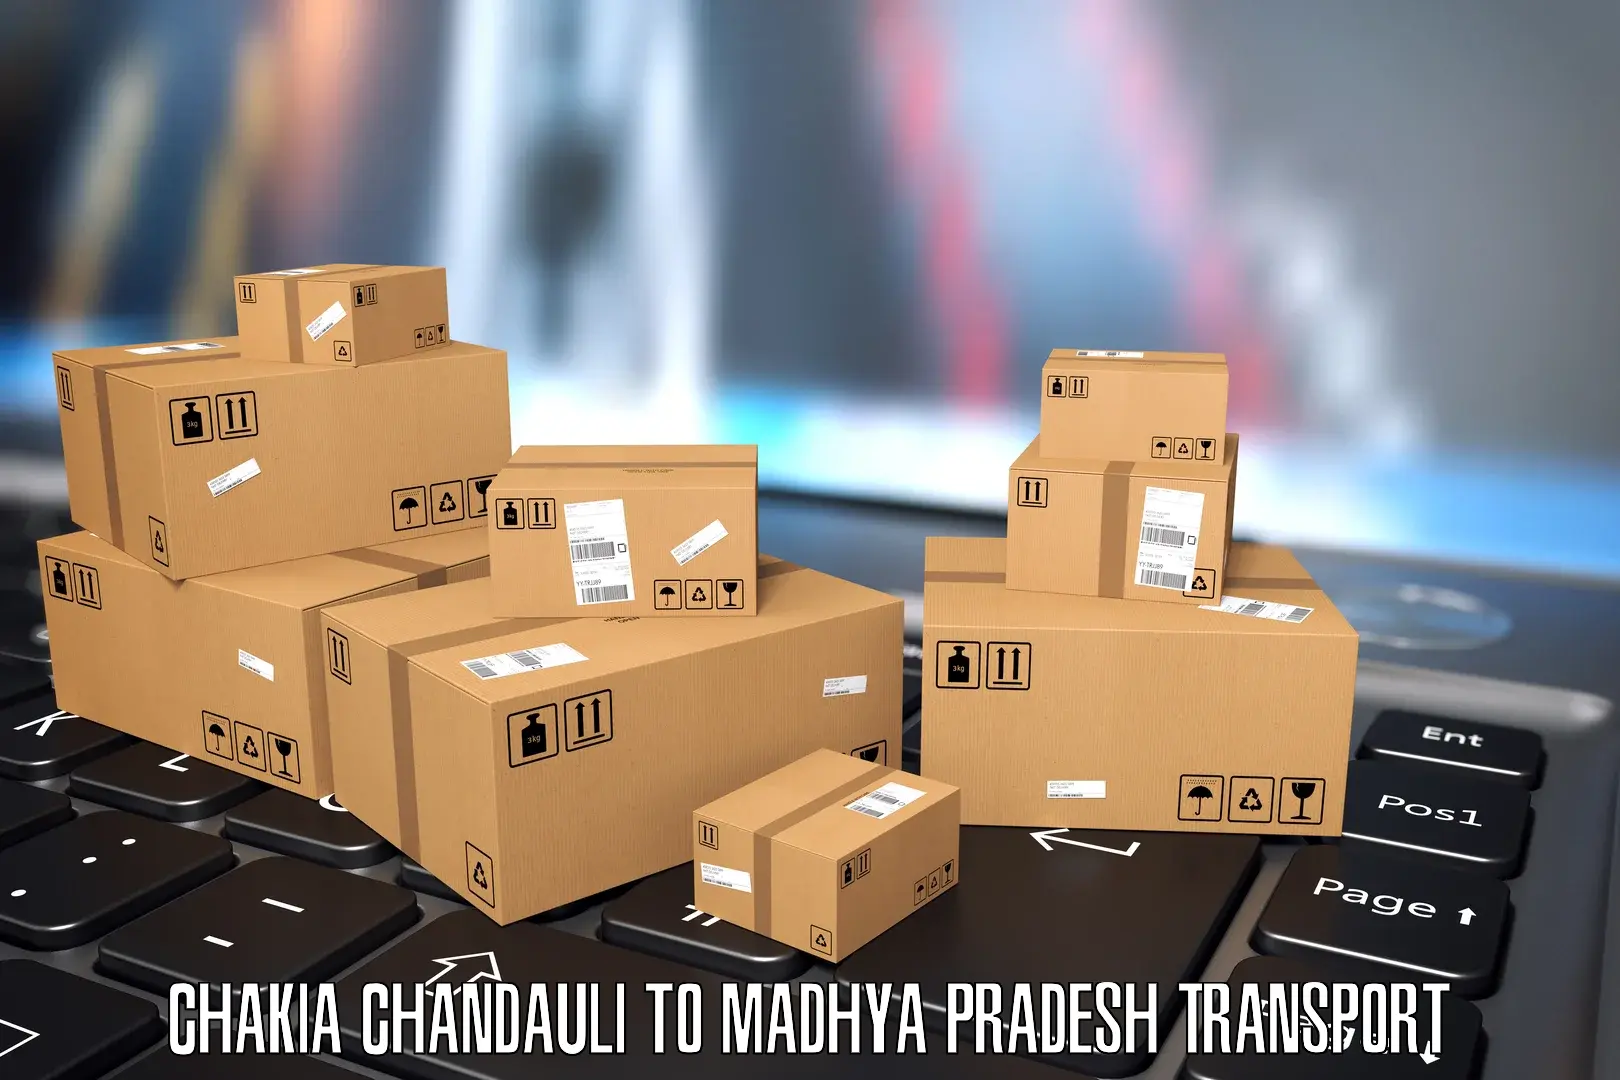 Daily transport service Chakia Chandauli to Vidisha